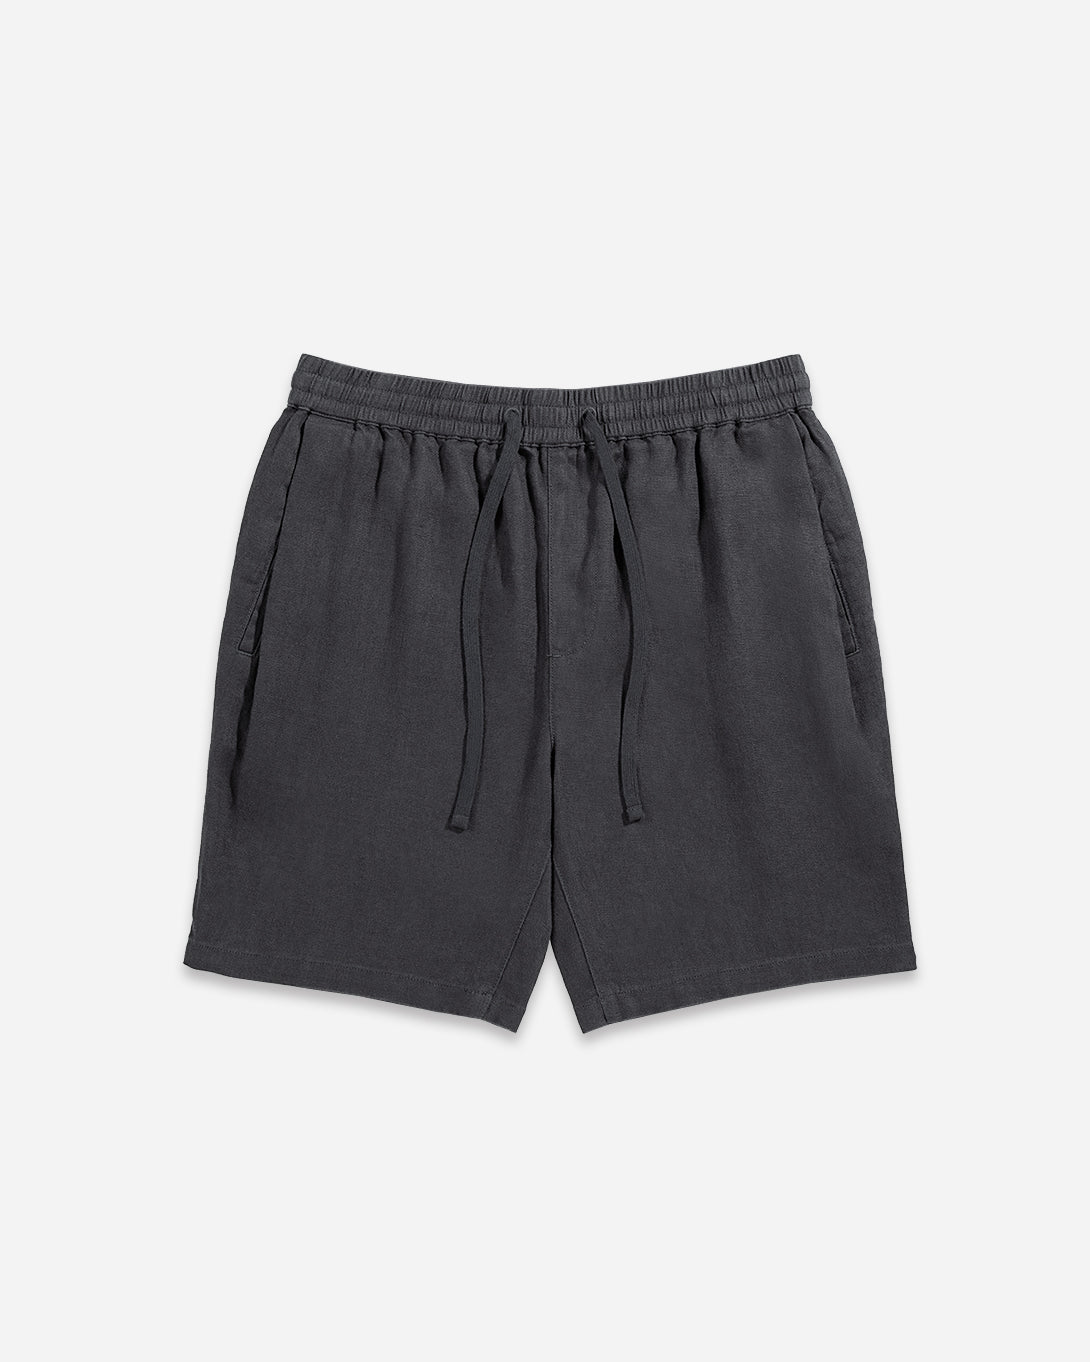 FORGED IRON Ward Linen Shorts Summer Linen Drawstring Short